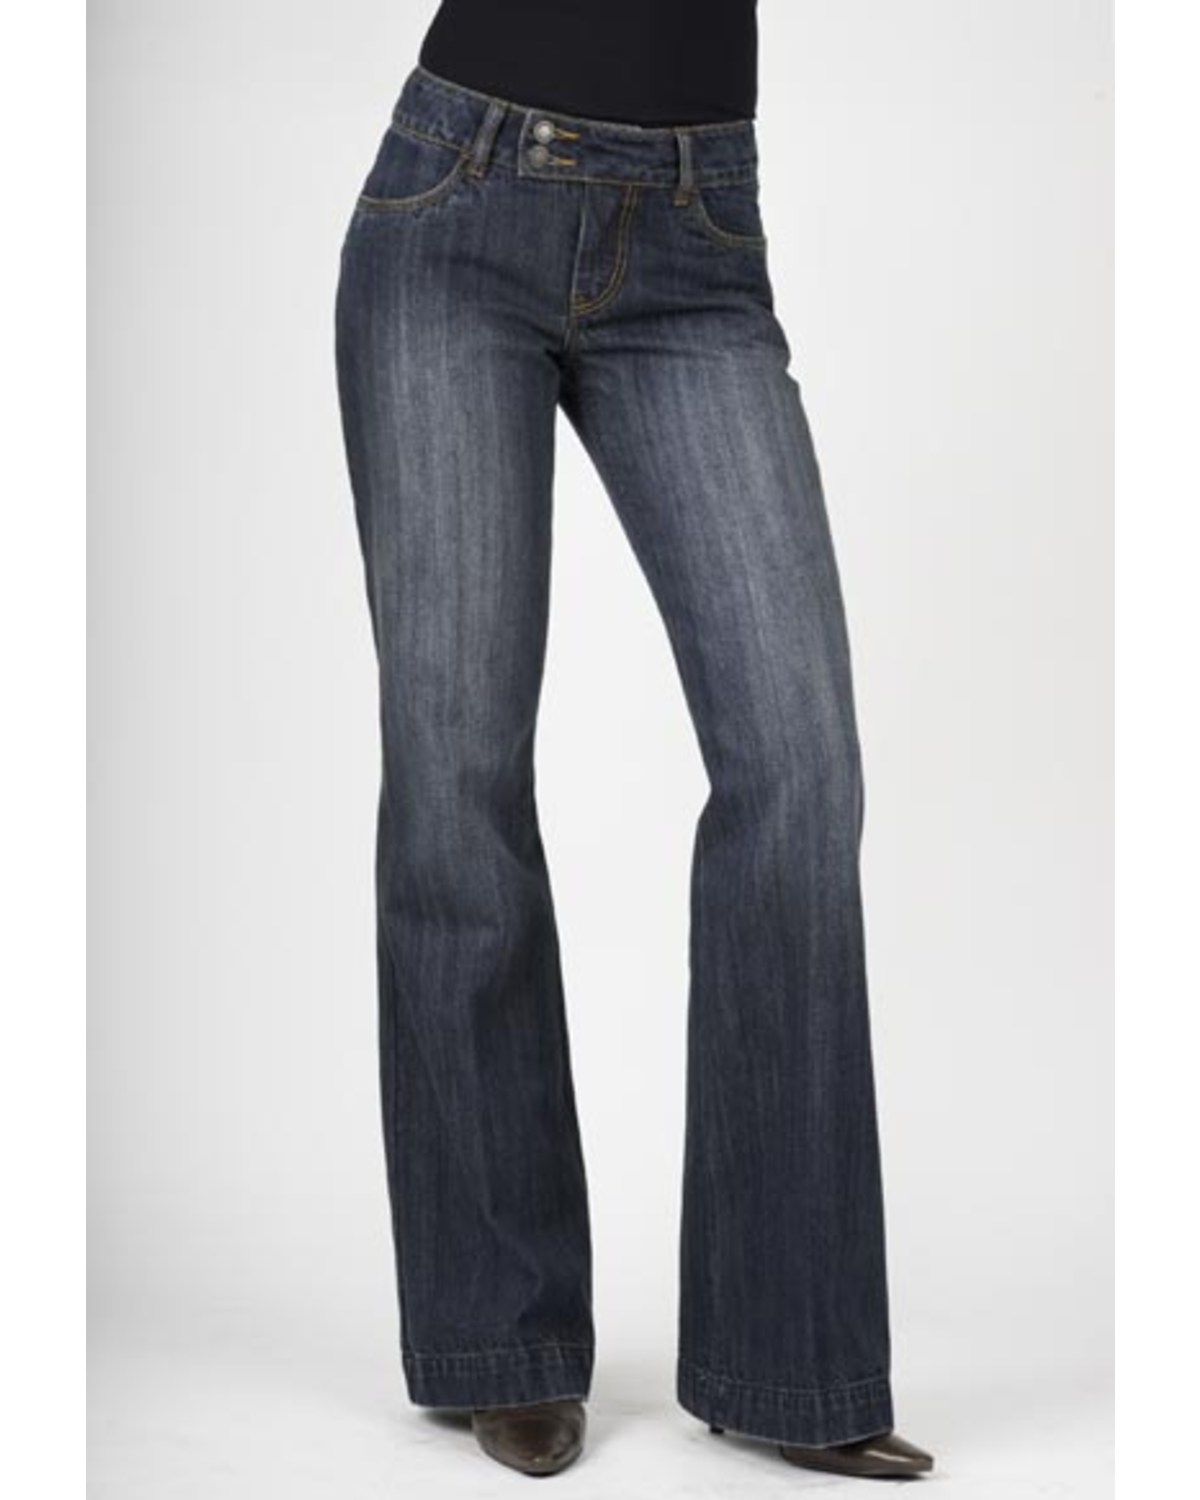 Stetson Women S Trouser Jeans Size Chart